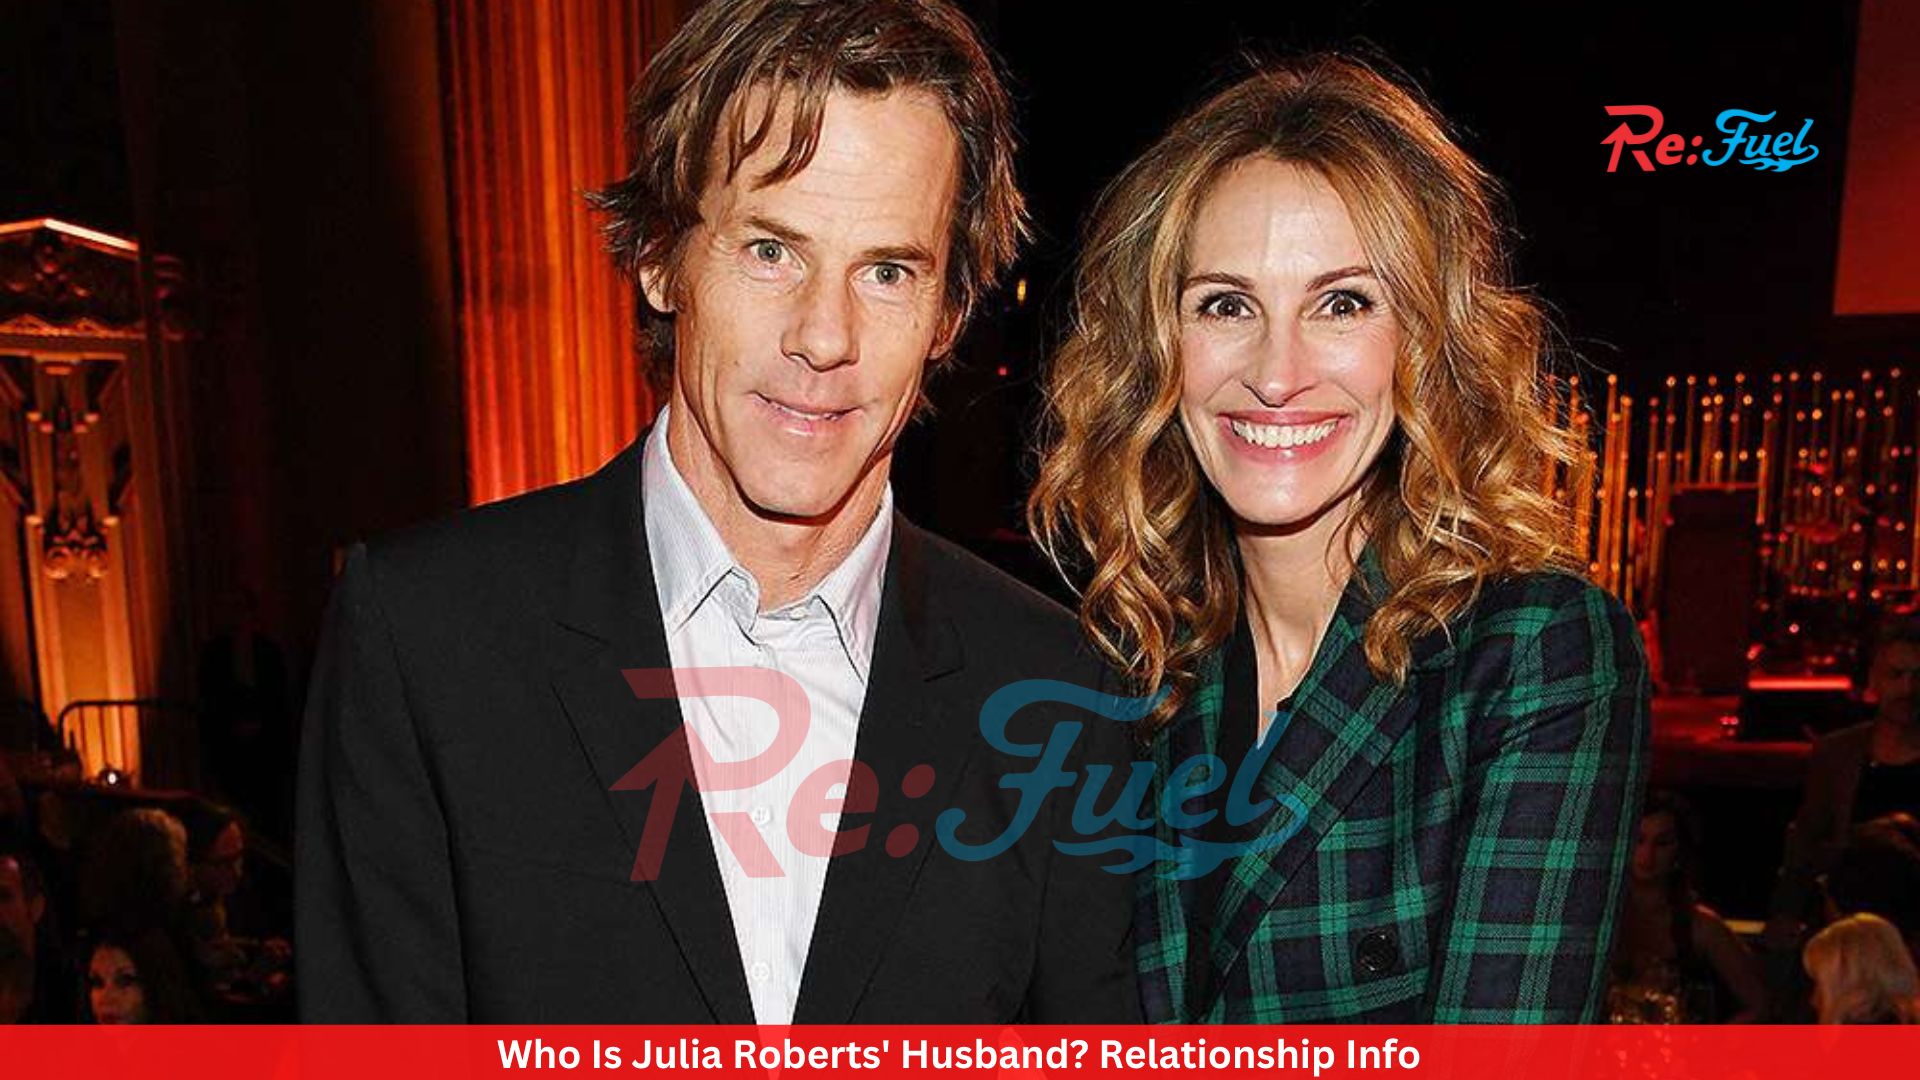 Who Is Julia Roberts' Husband? Relationship Info